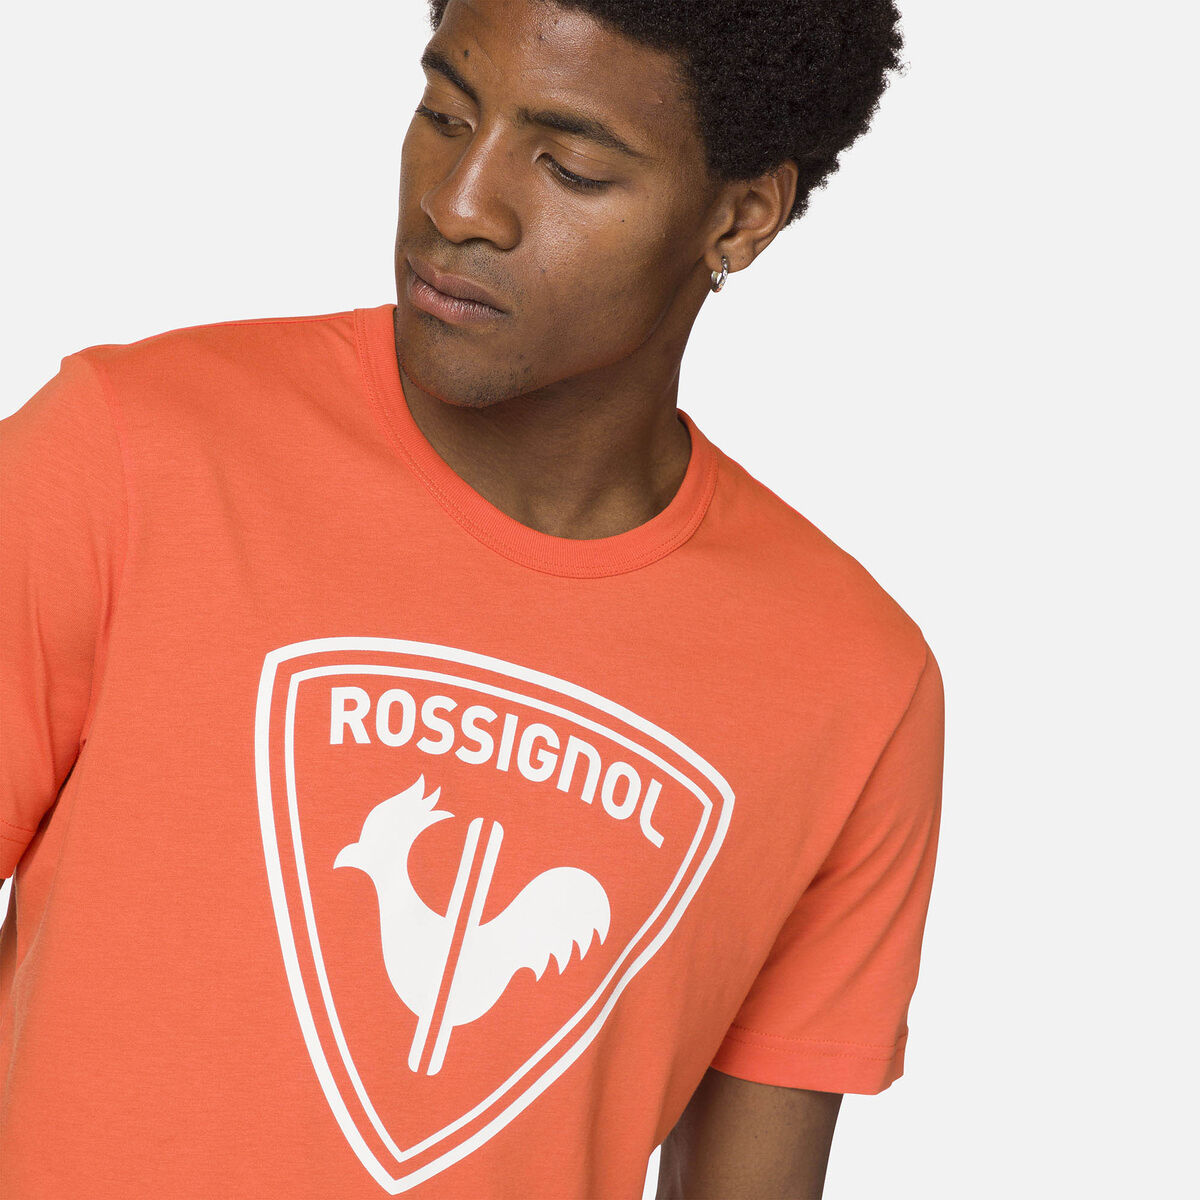 Rossignol Logo Rossignol Herren-T-Shirt orange